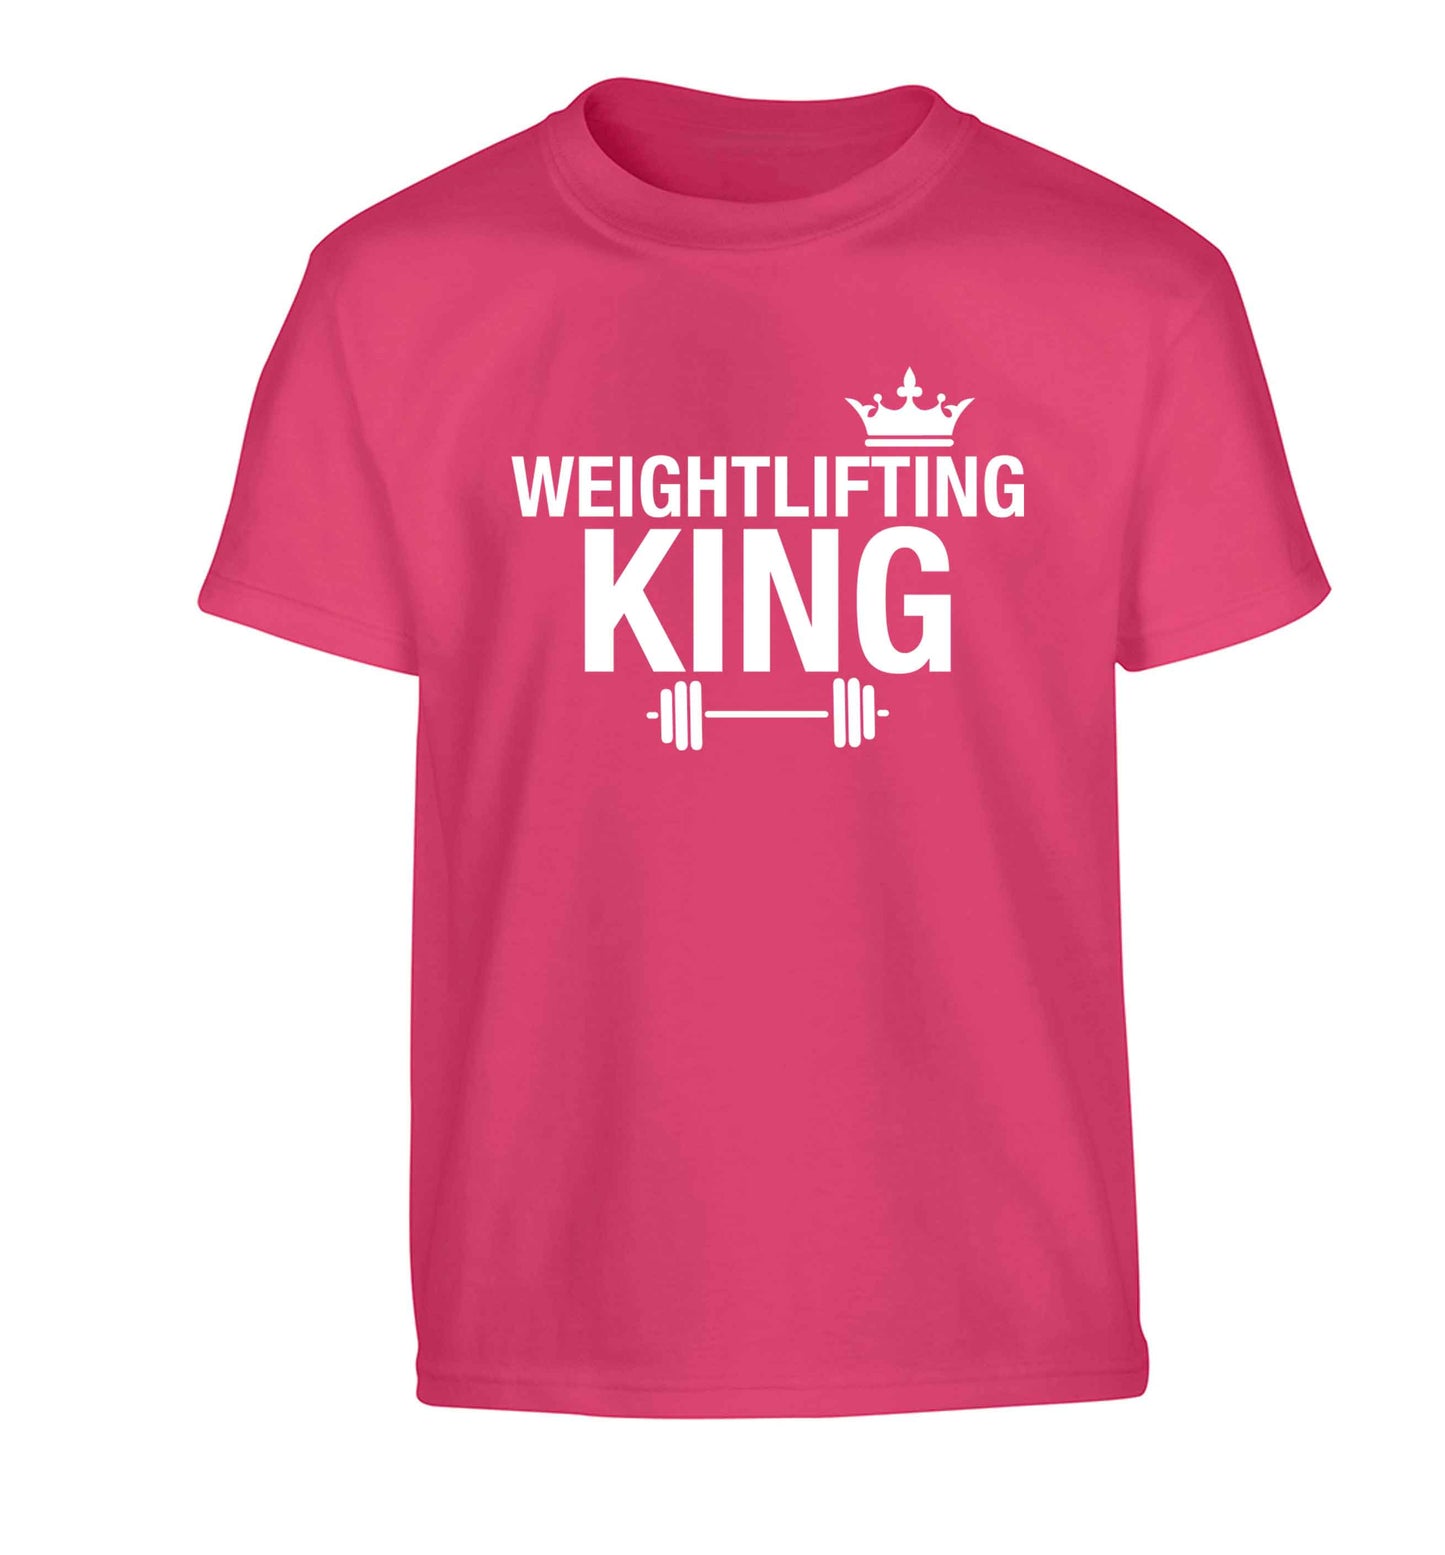 Weightlifting king Children's pink Tshirt 12-13 Years